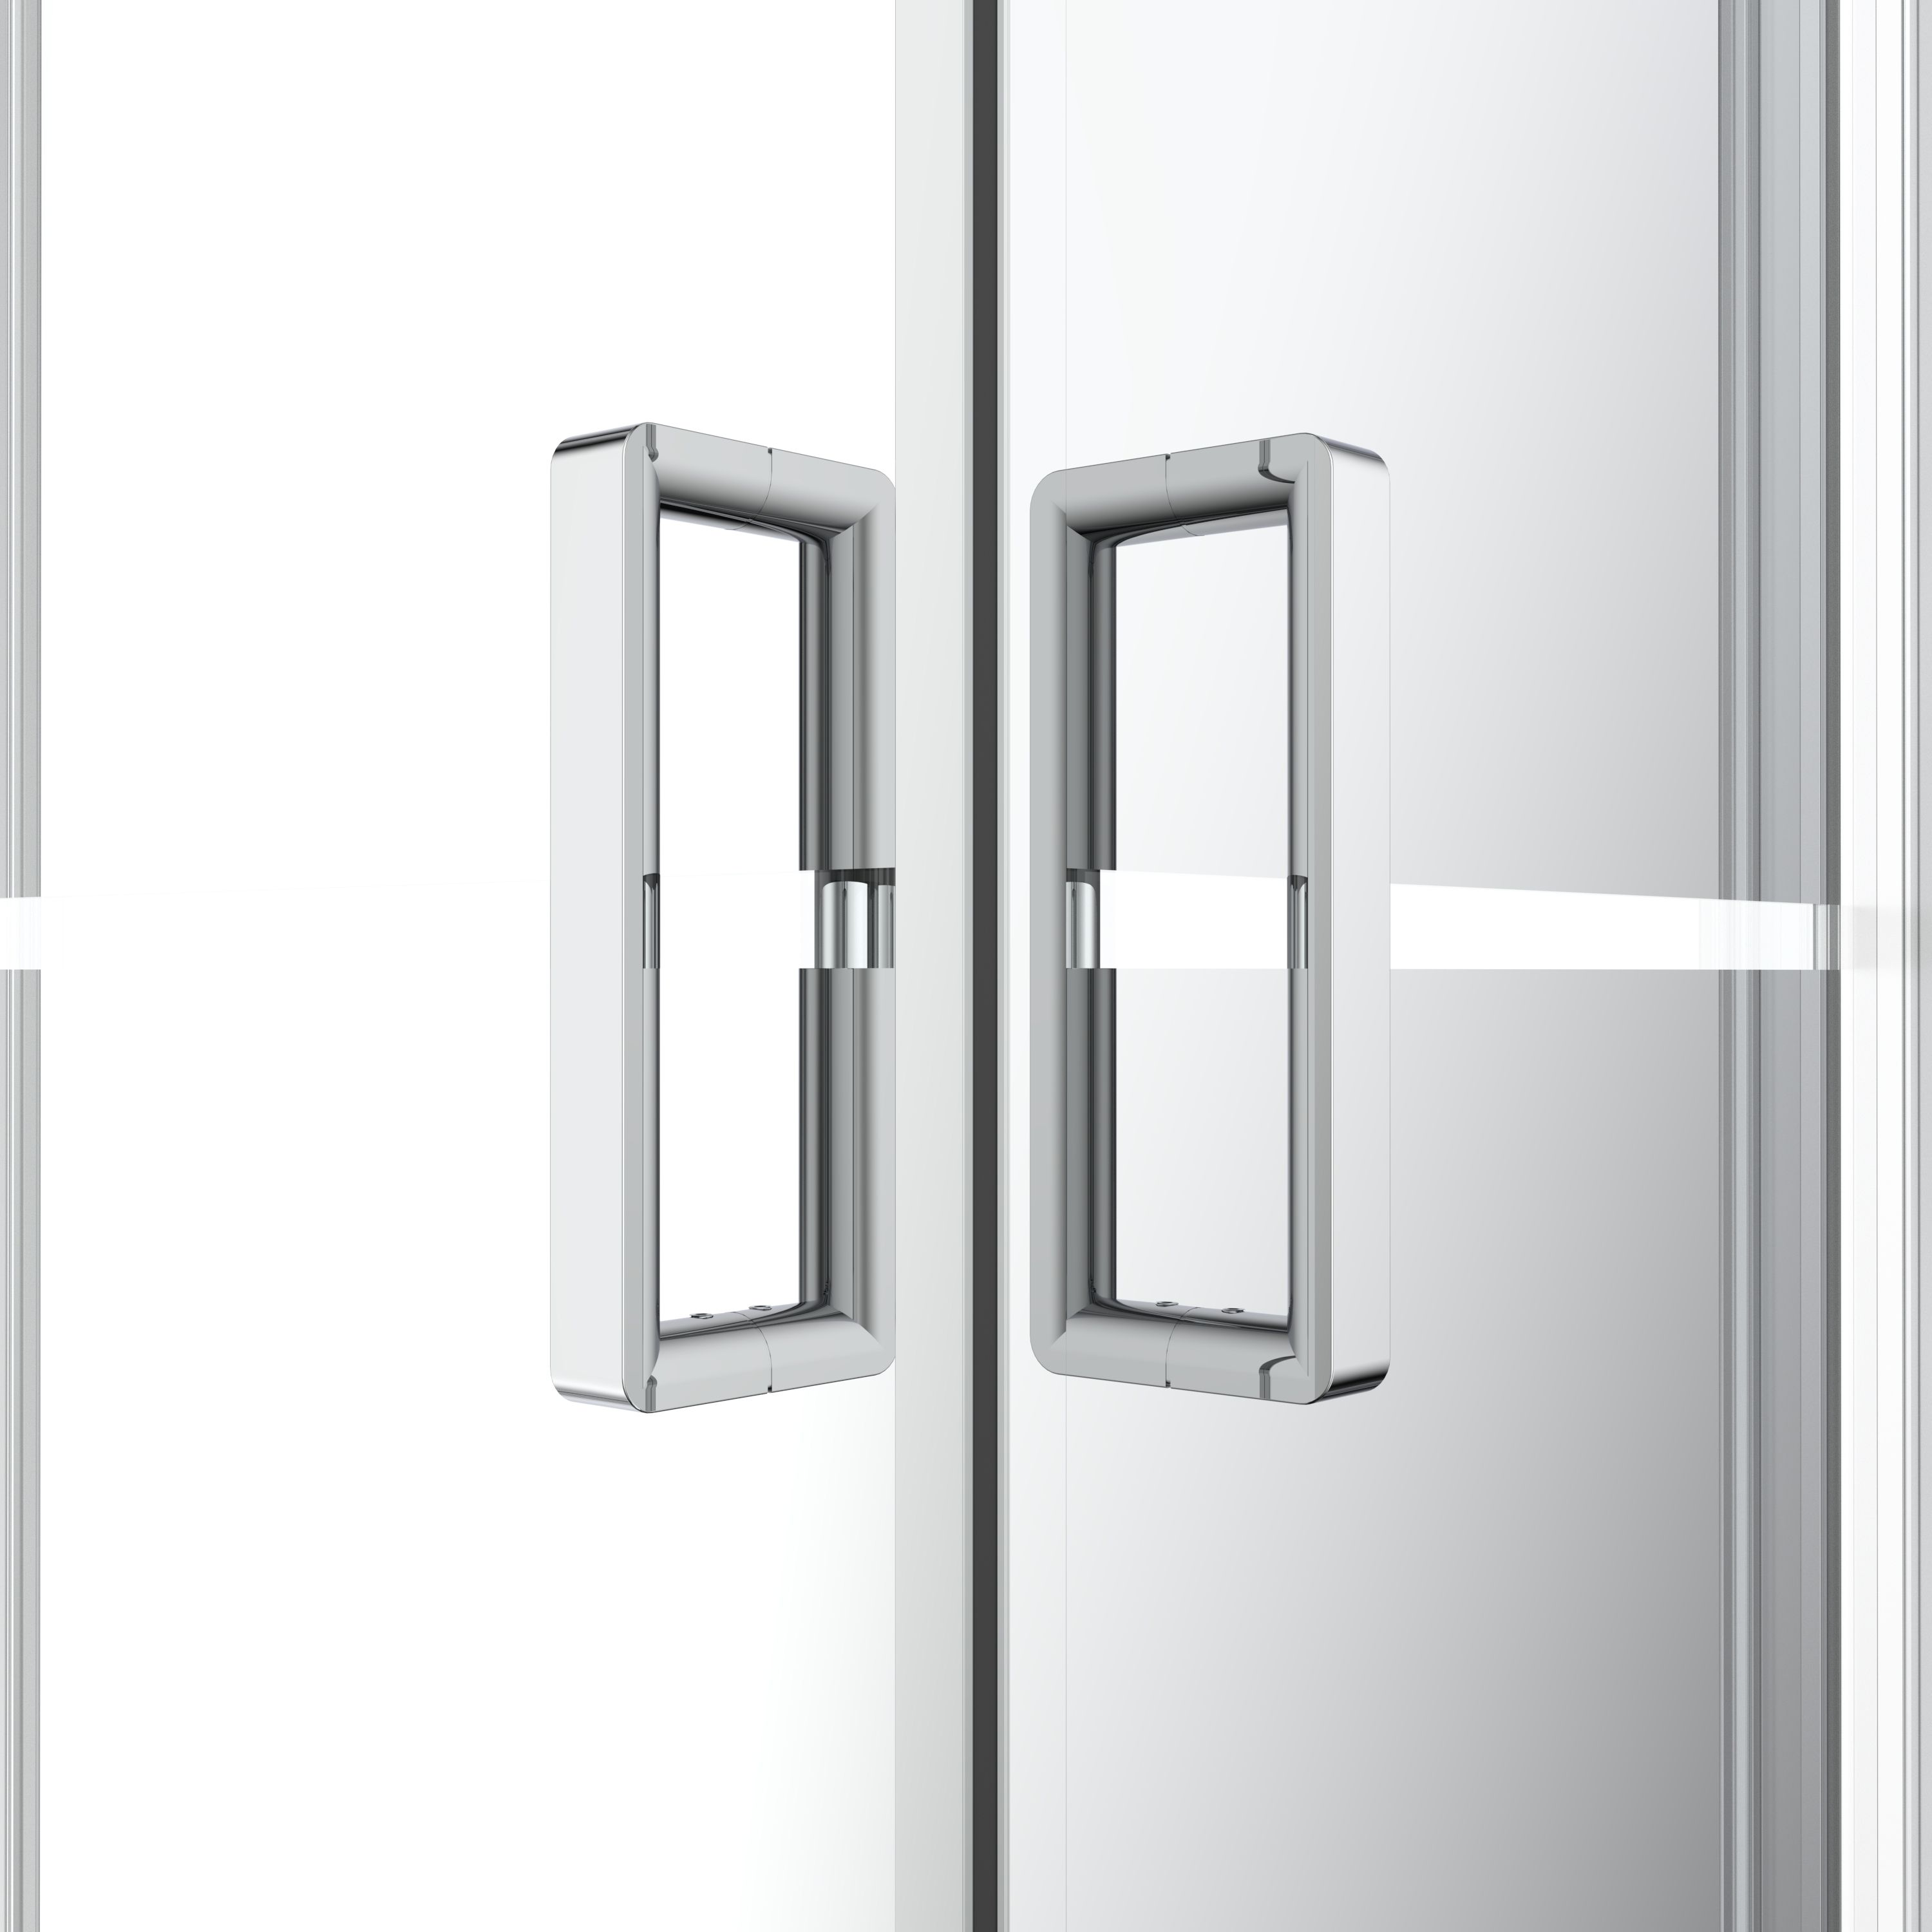 GoodHome Ledava Semi-mirrored Chrome effect Square Shower enclosure - Corner entry double sliding door (W)90cm (D)90cm